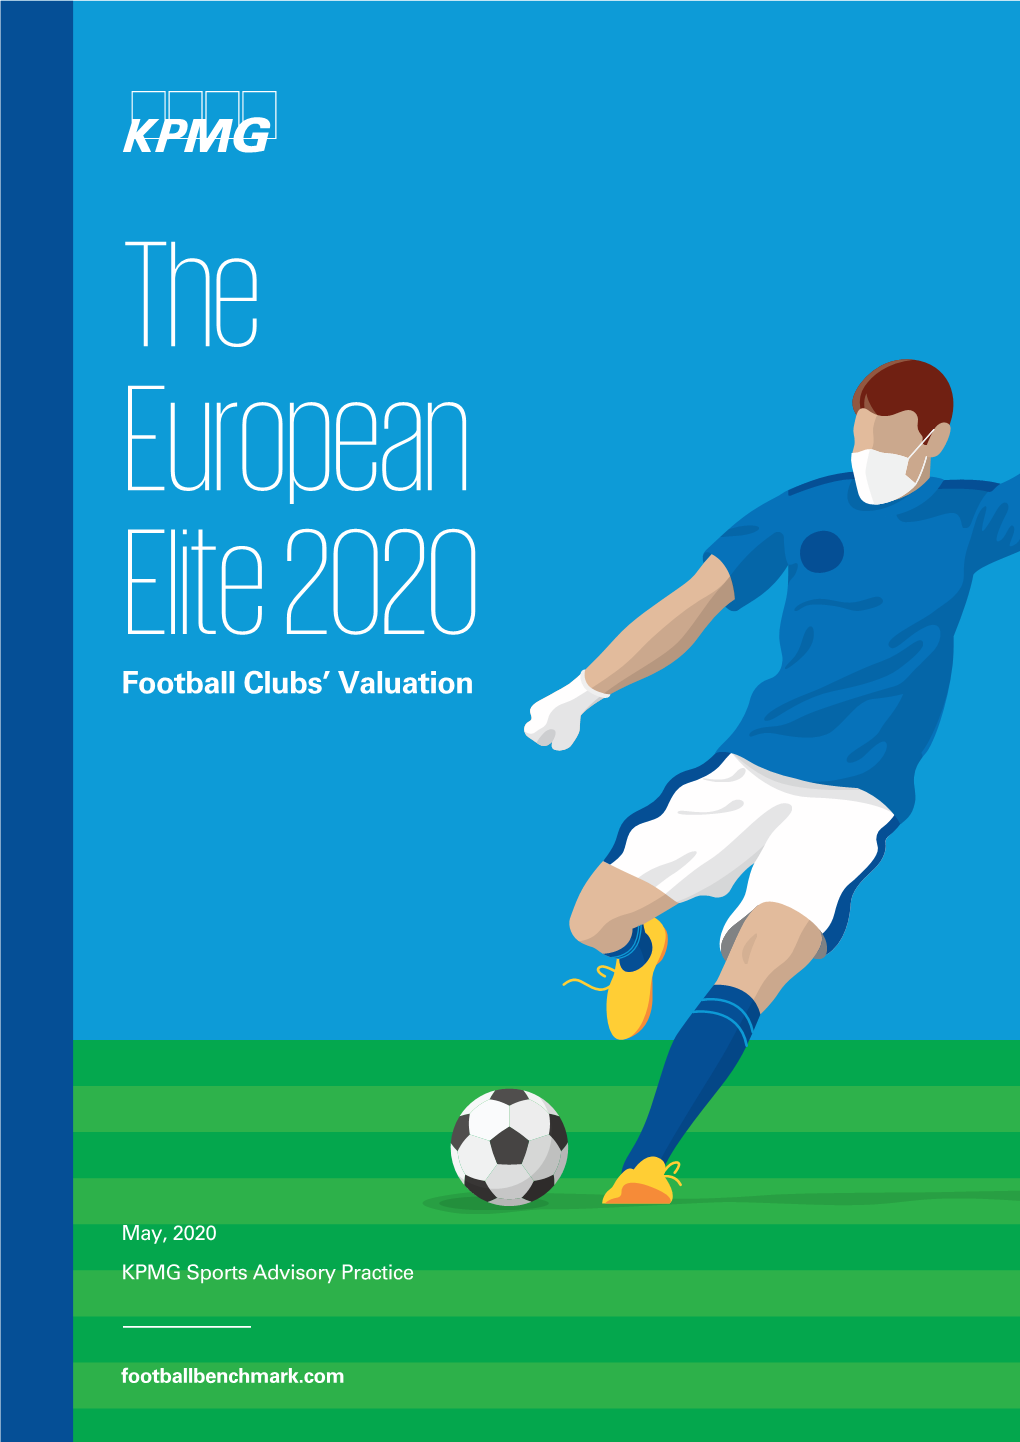 Football Clubs' Valuation: the European Elite 2020